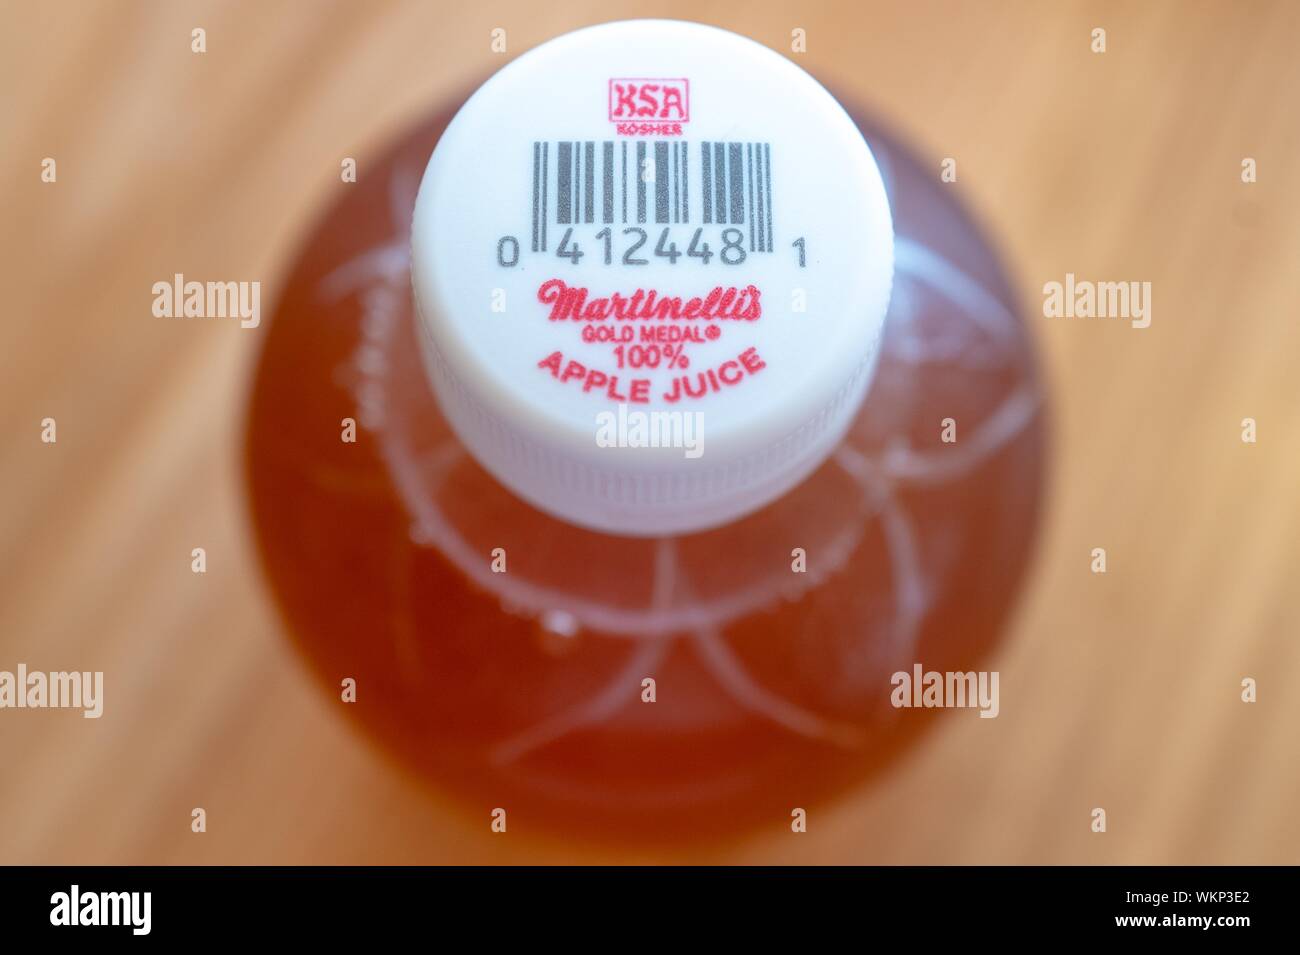 Close-up of logo for KSA Kosher certification on top of Martinelli's apple juice bottle, September 2, 2019. () Stock Photo